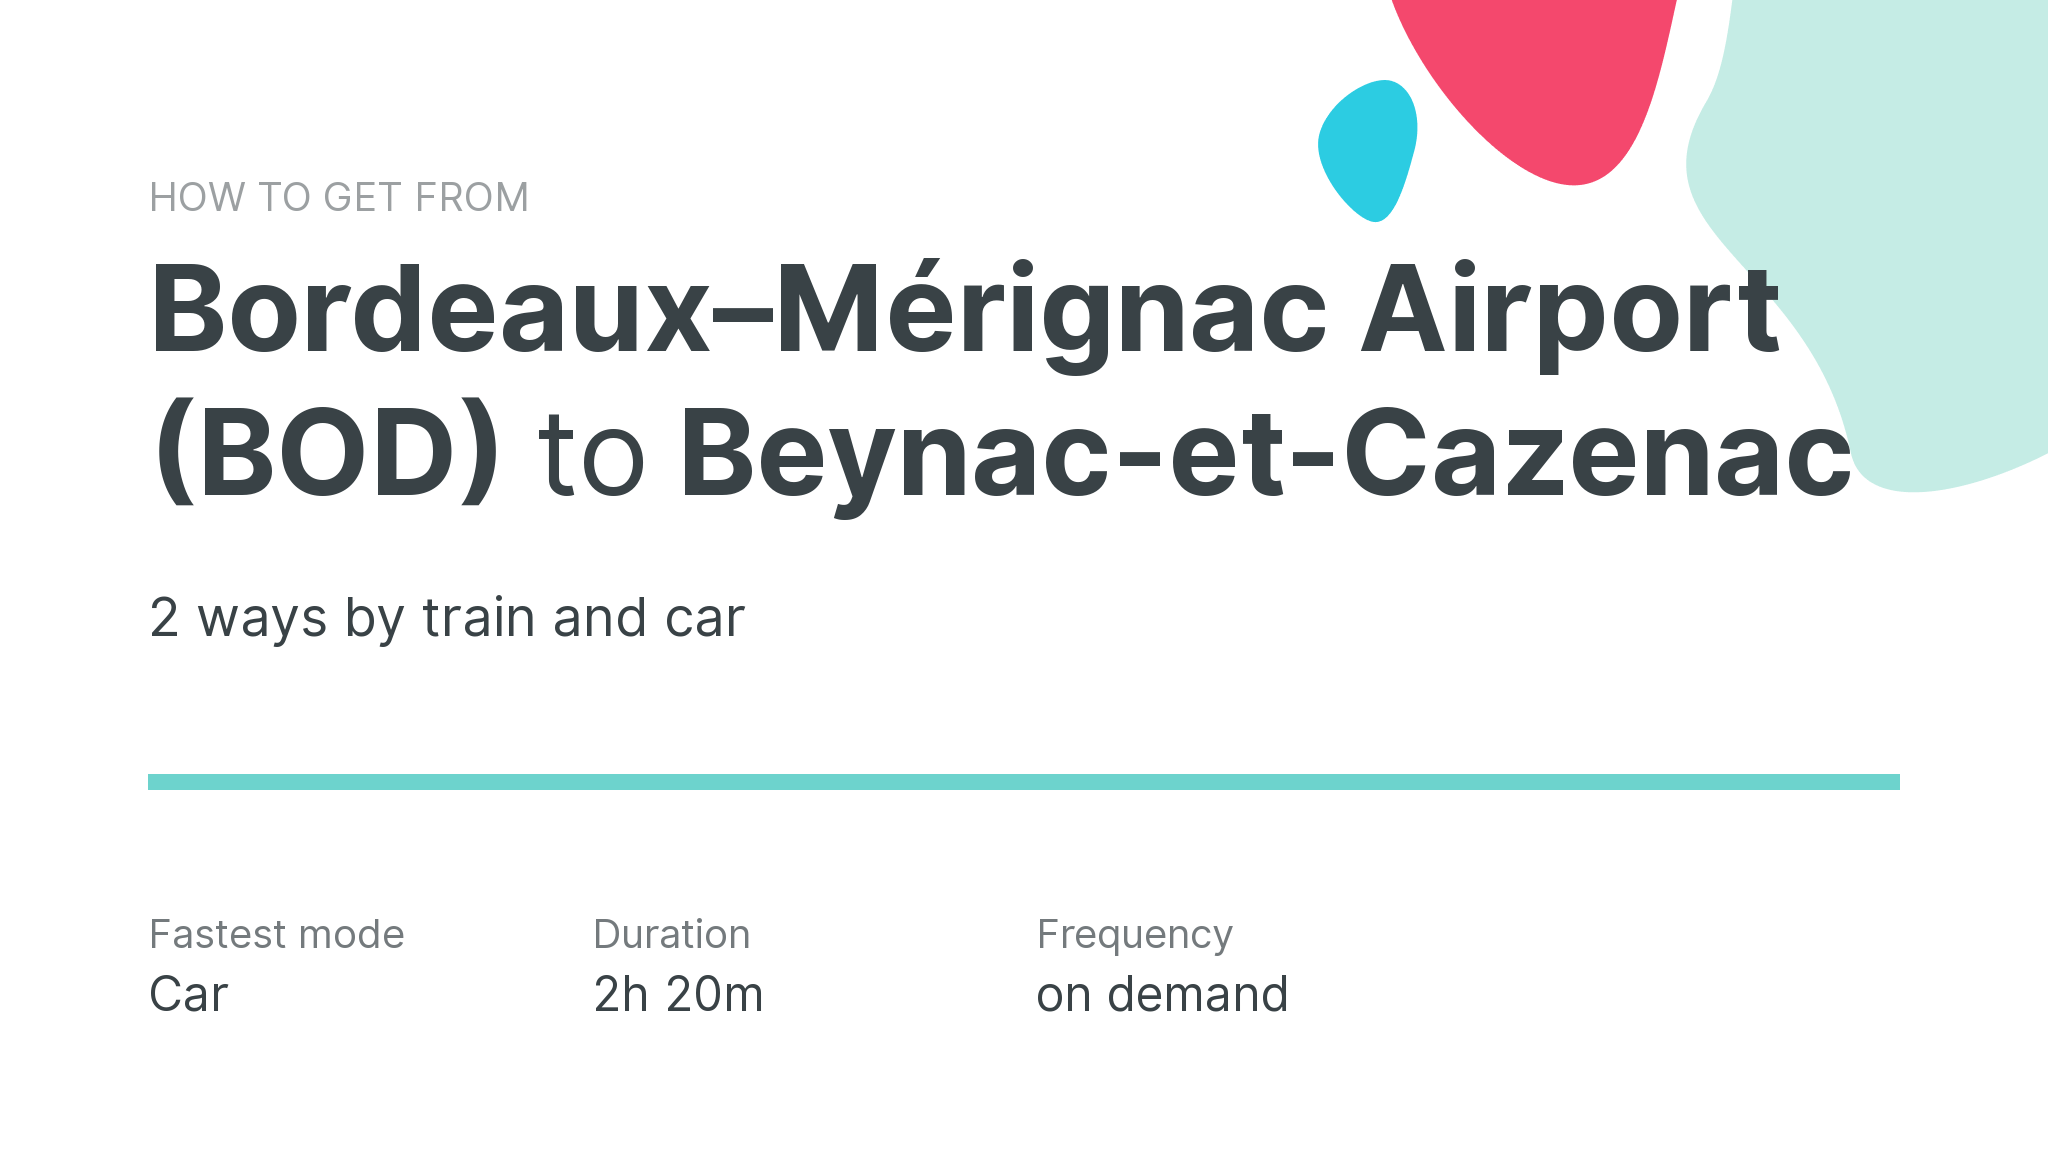 How do I get from Bordeaux–Mérignac Airport (BOD) to Beynac-et-Cazenac